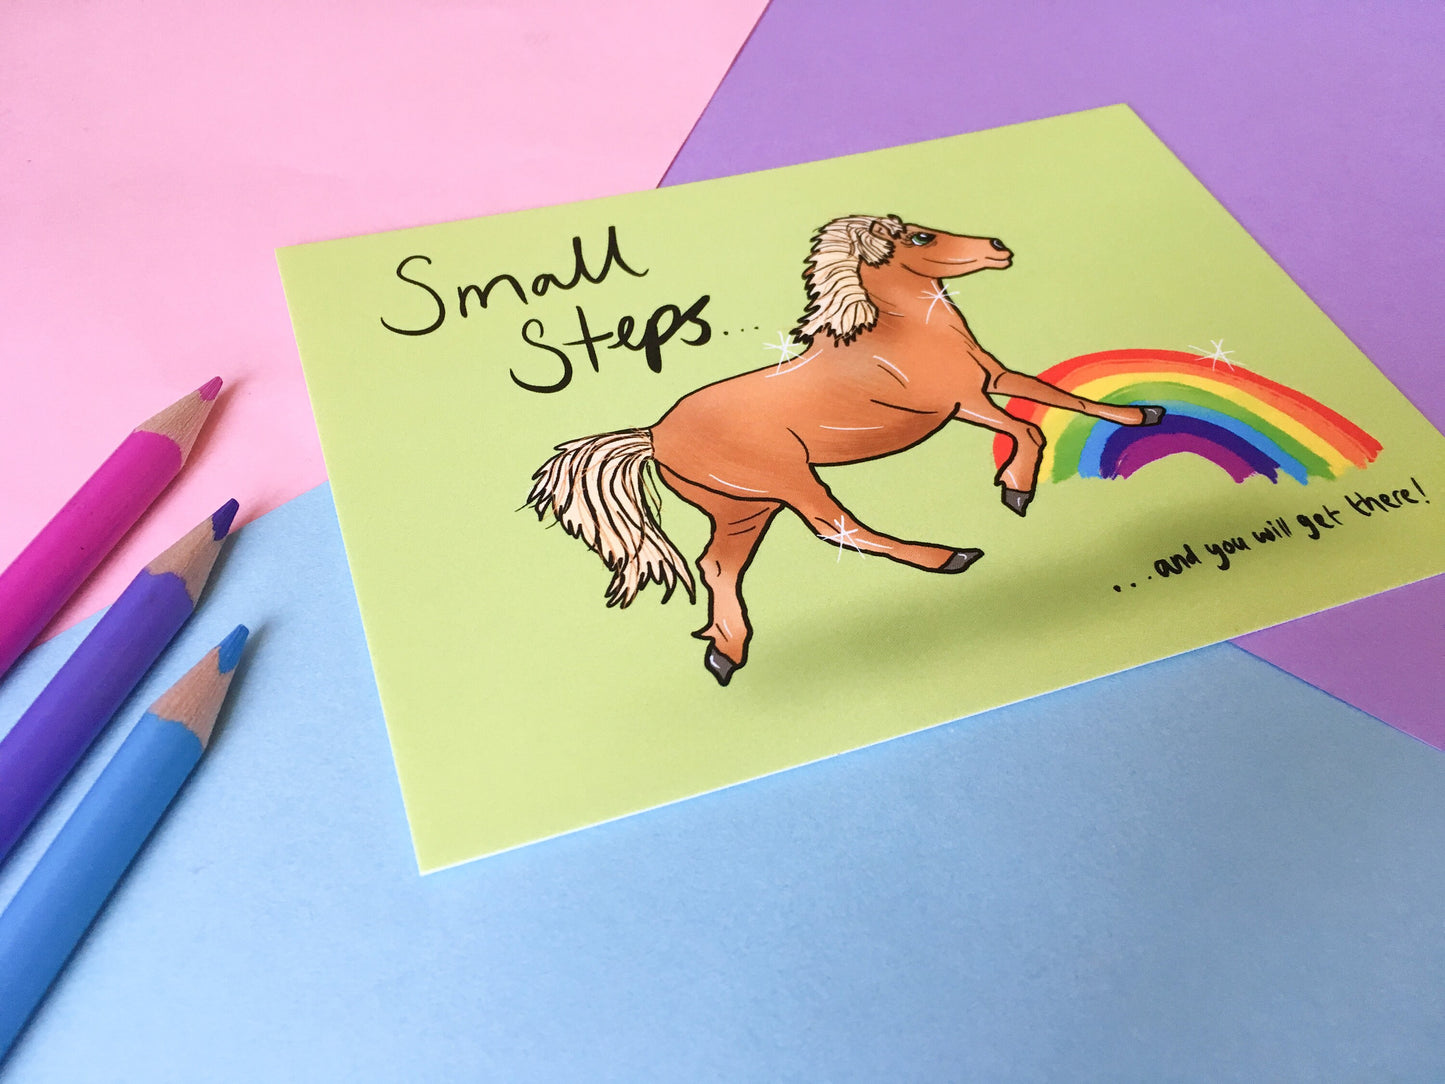 Small Steps Pony A6 Motivational Postcard